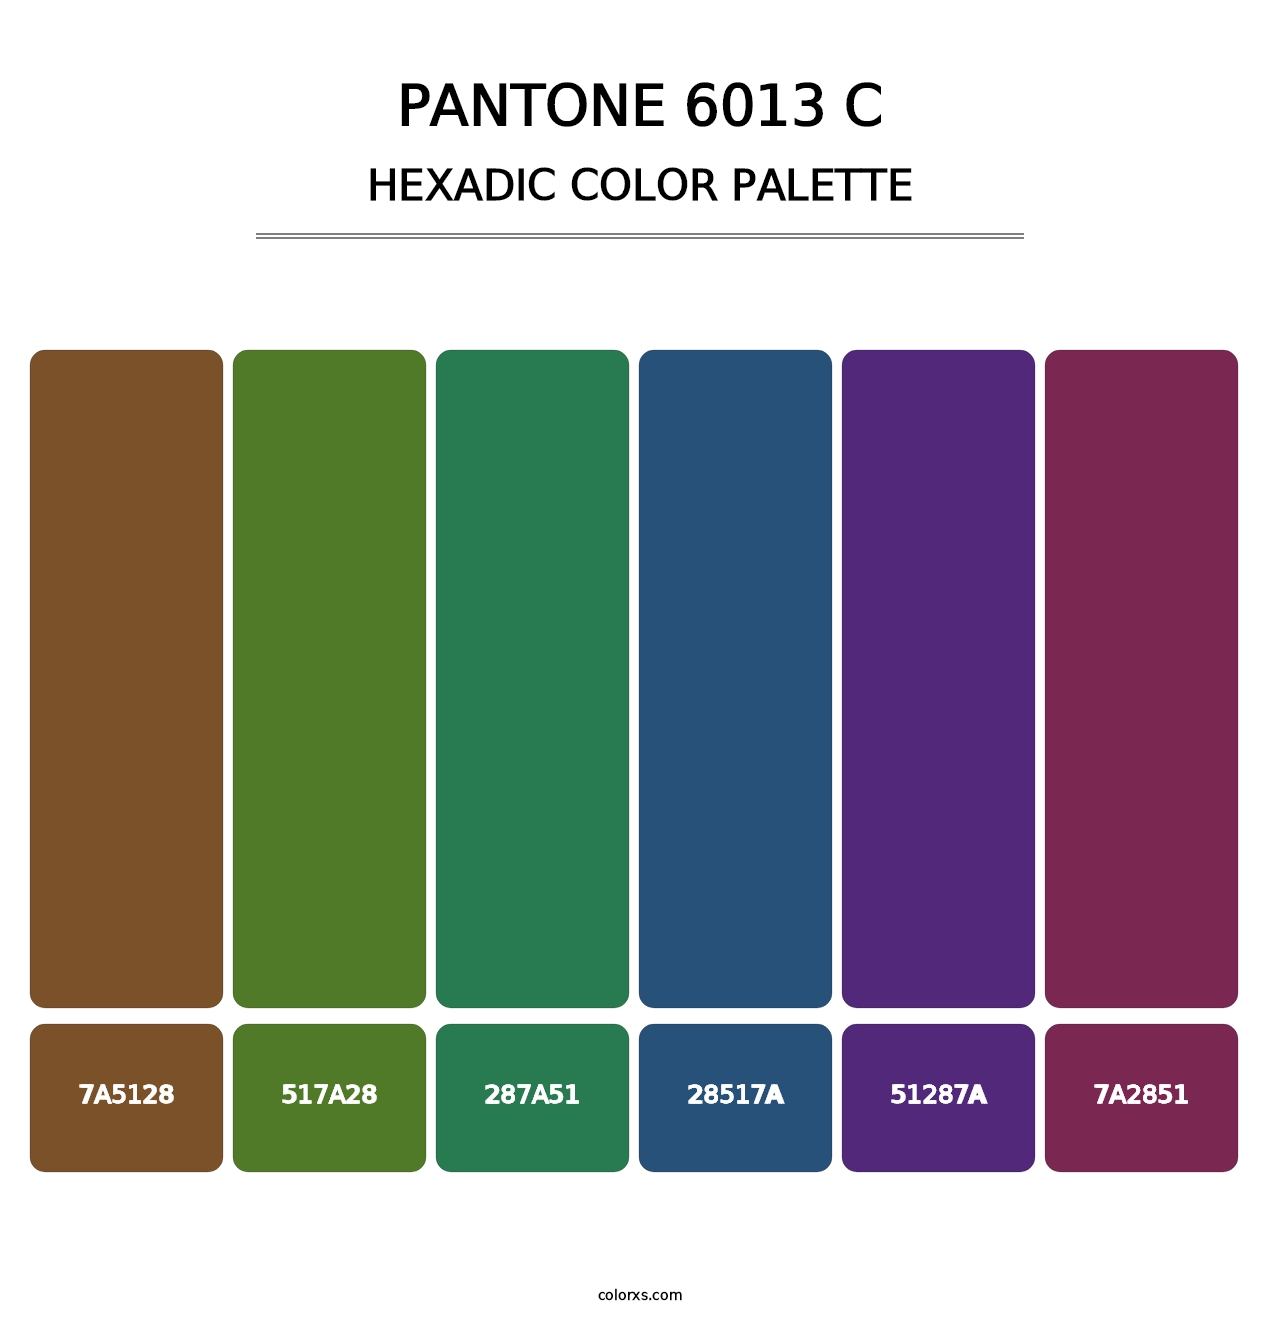 PANTONE 6013 C - Hexadic Color Palette